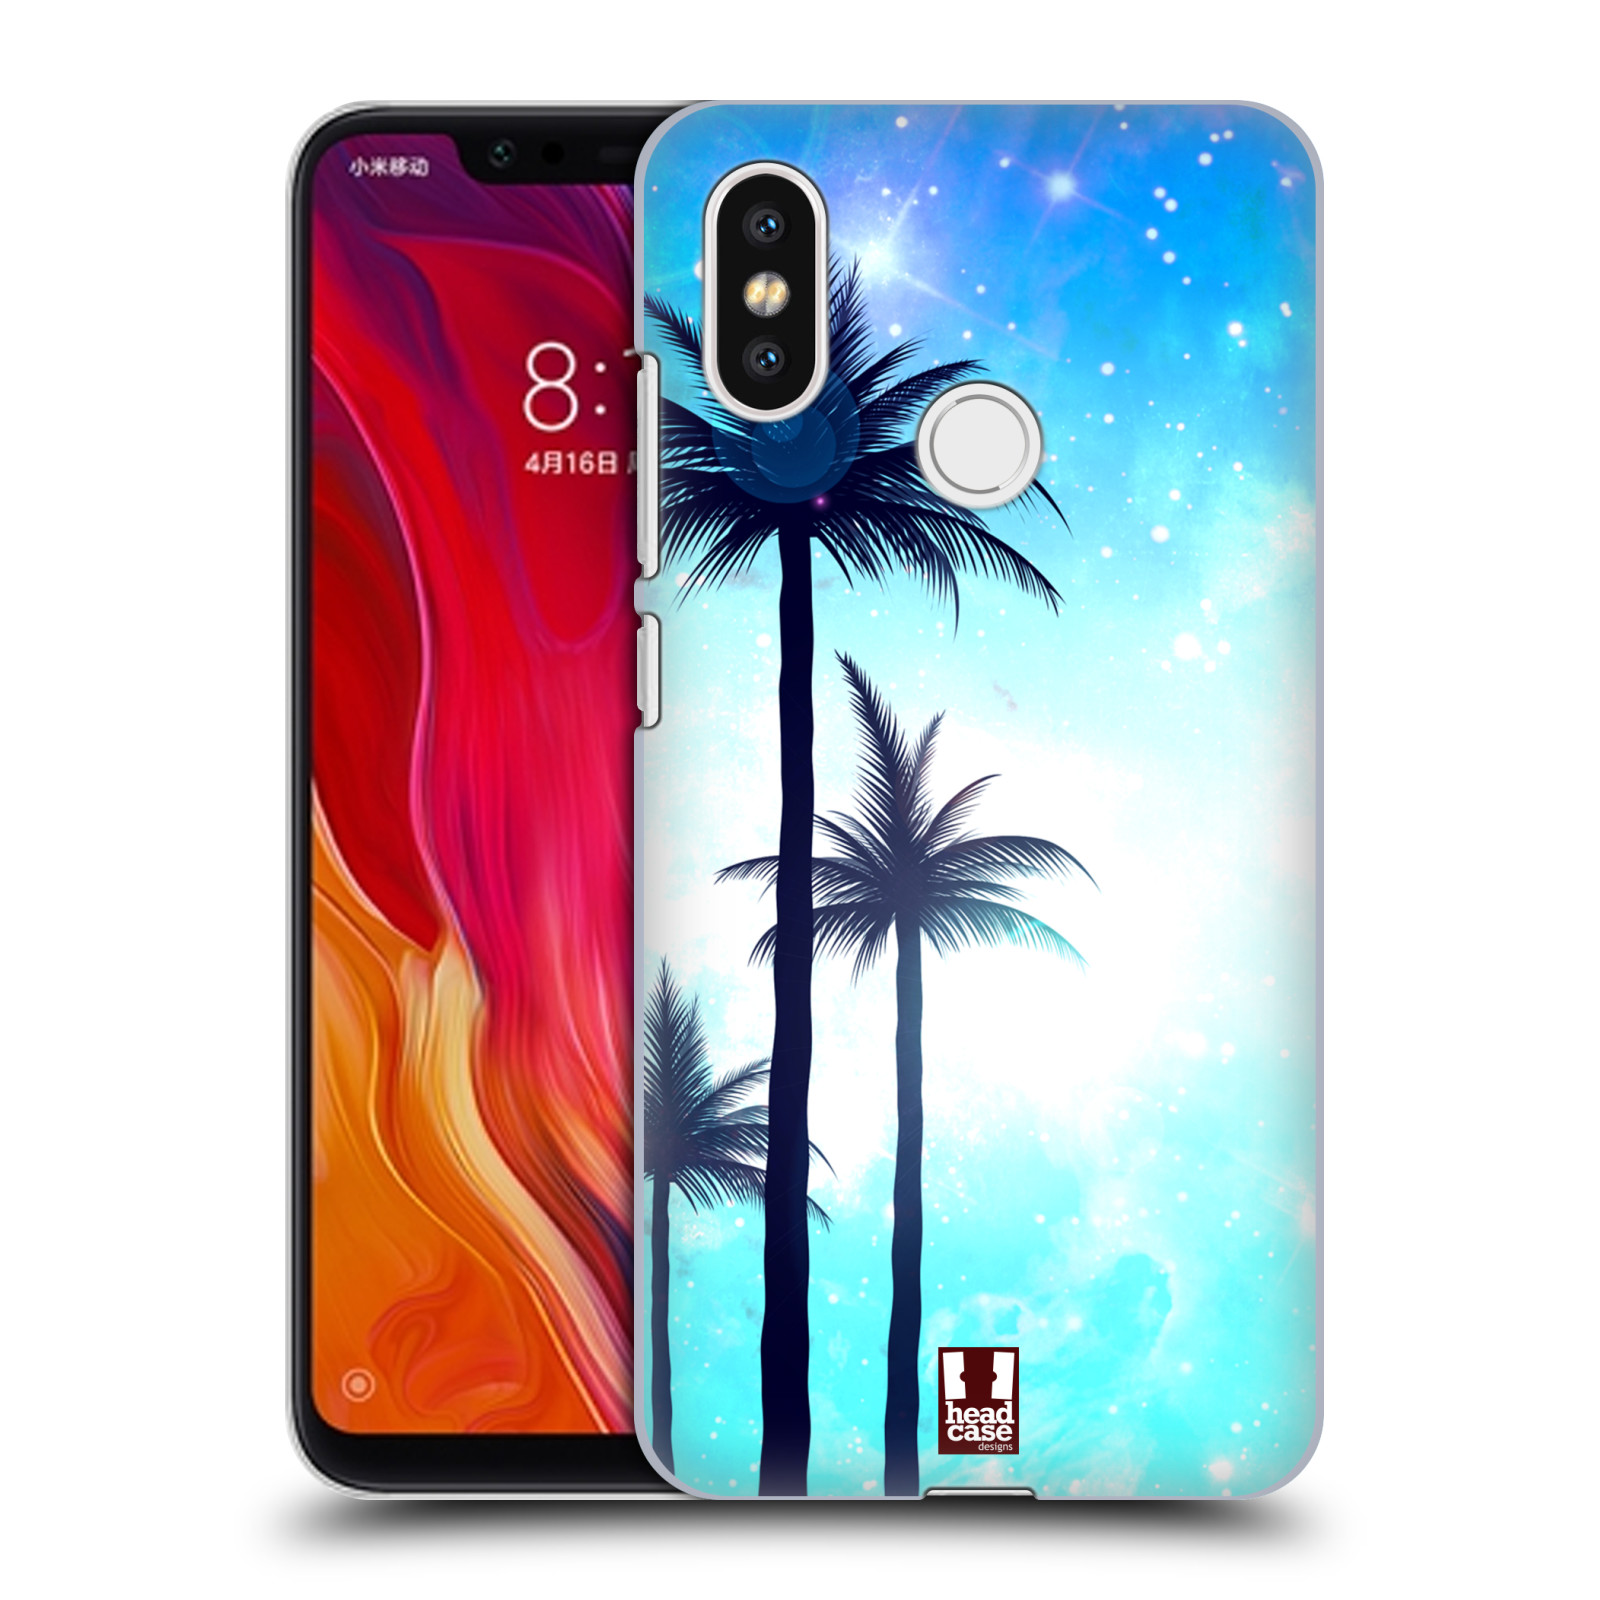 HEAD CASE plastový obal na mobil Xiaomi Mi 8 vzor Kreslený motiv silueta moře a palmy MODRÁ